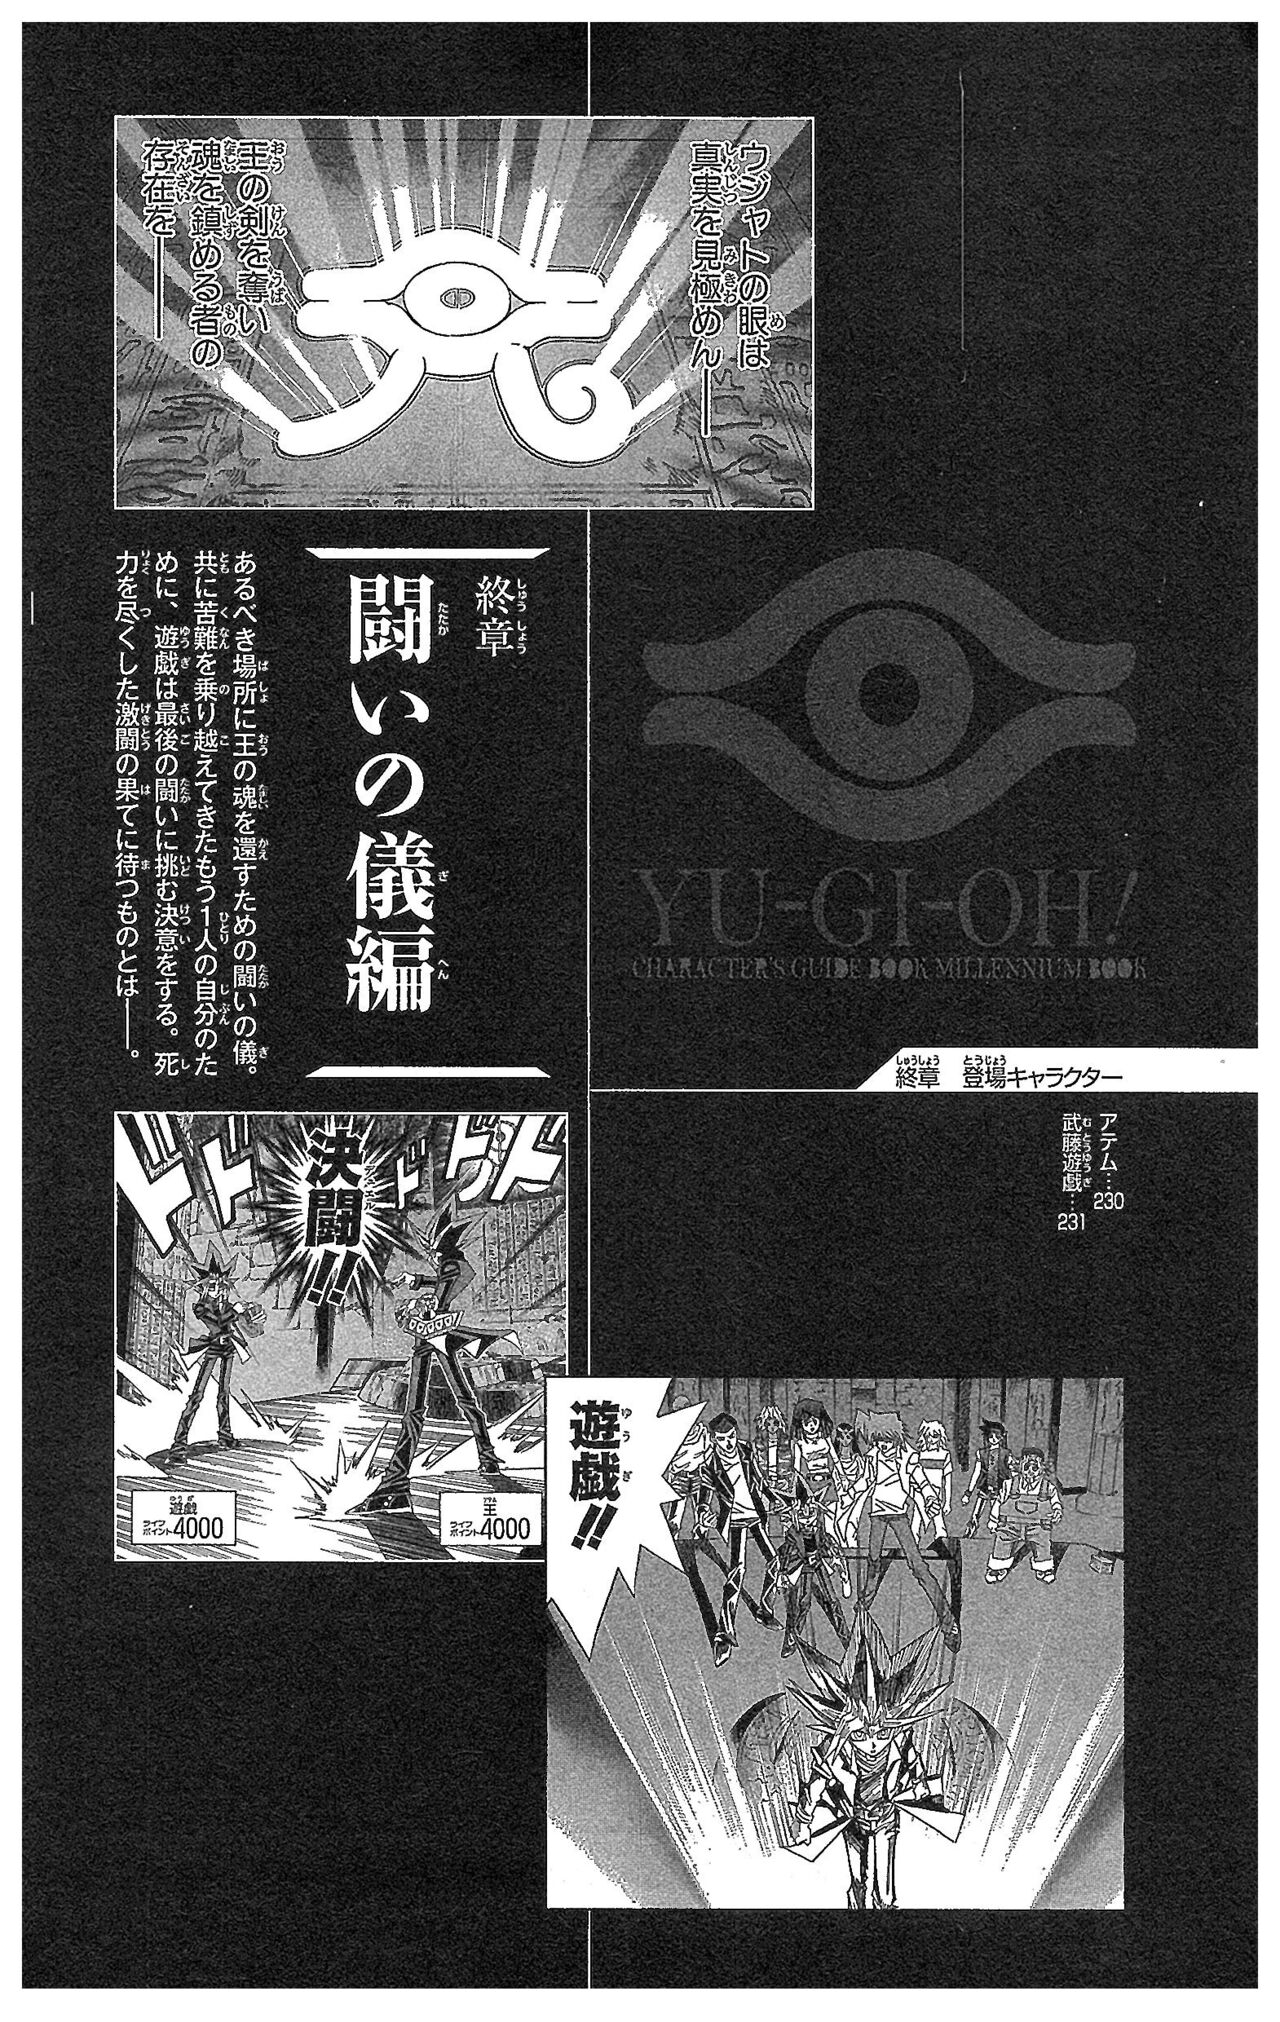 Yu-Gi-Oh! Character Guidebook: Millennium Book 223